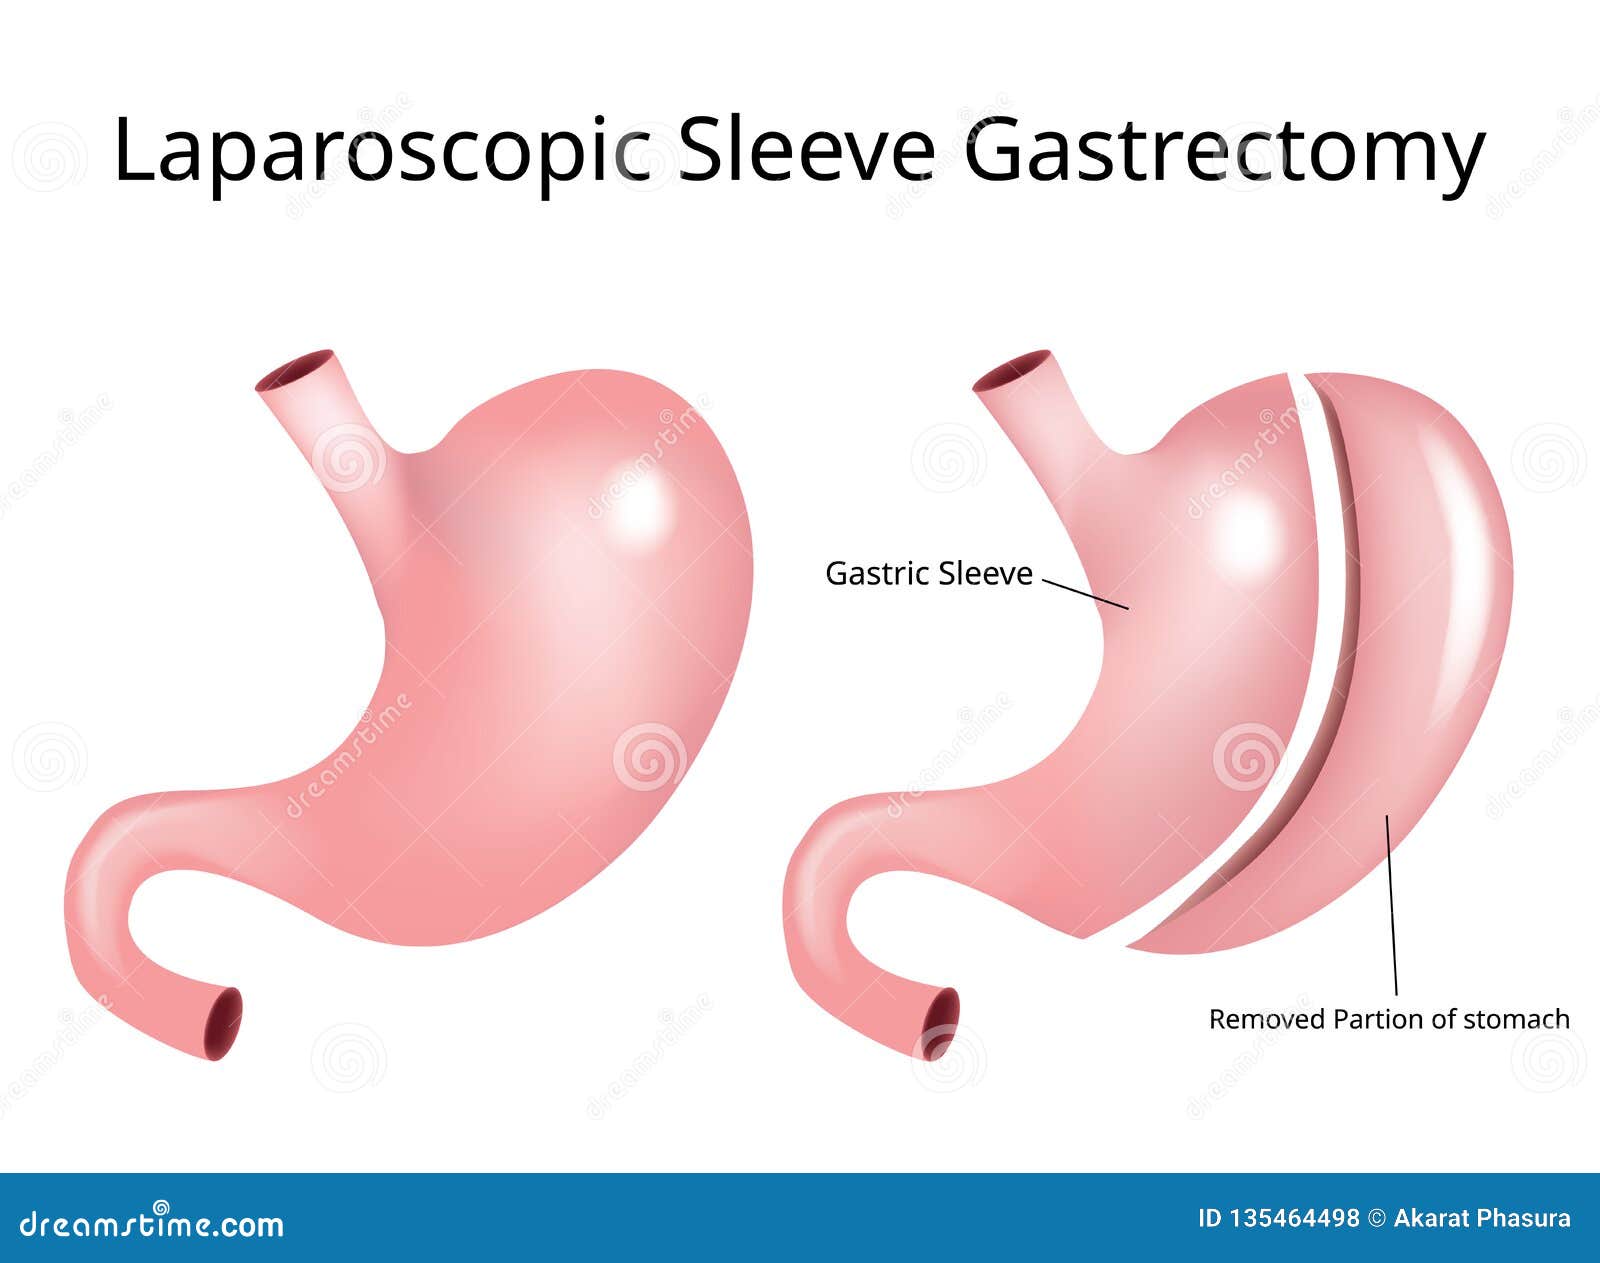 laparoscopic sleeve gastrectomy / weight loss surgery - 